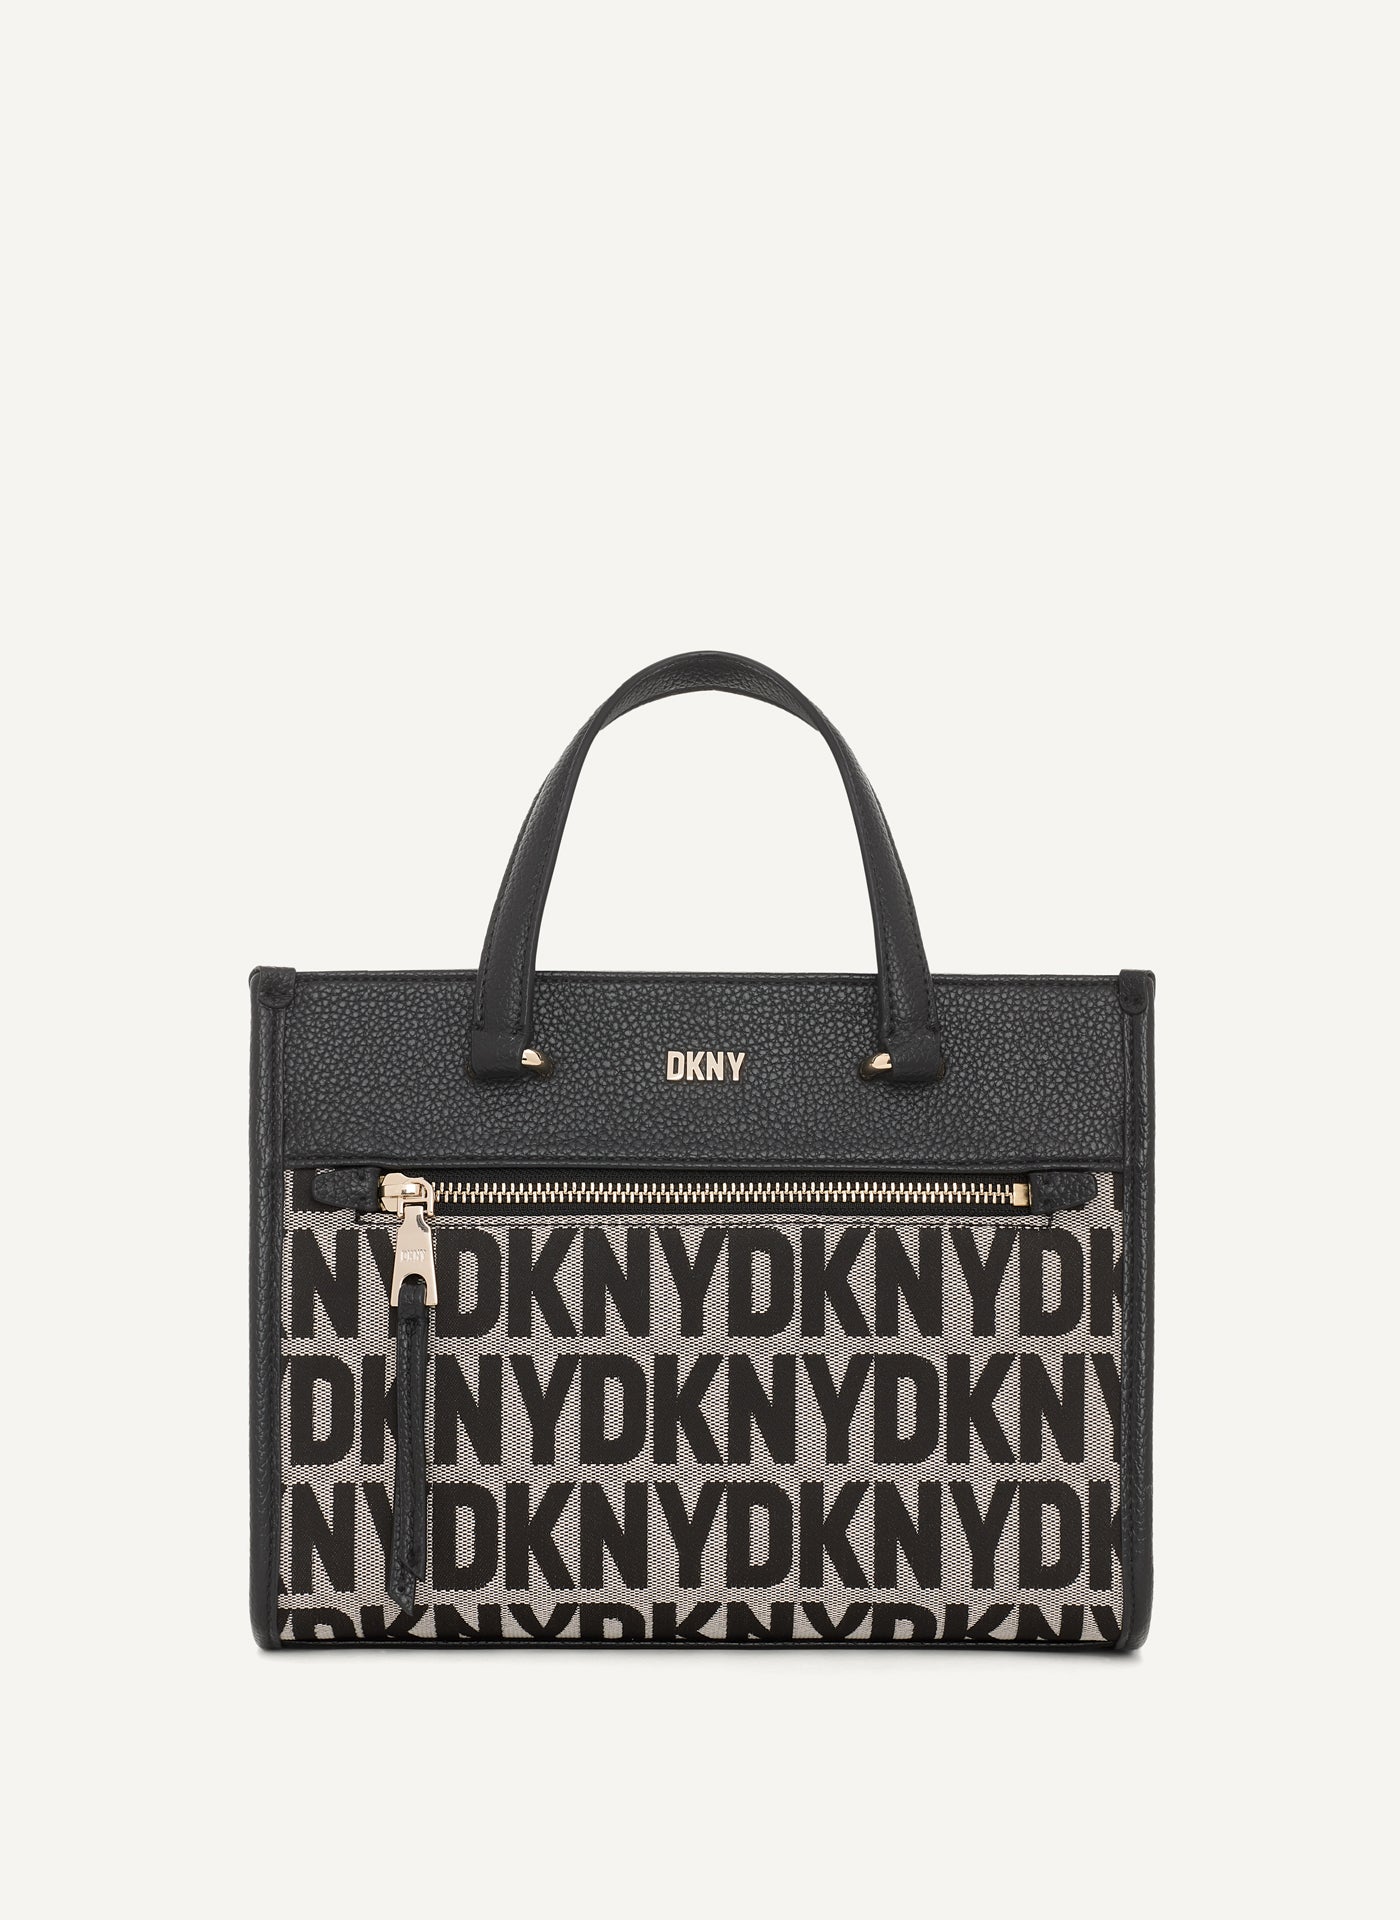 DKNY Black Allen Embroidered Leather Crossbody Handbag Purse - Walmart.com